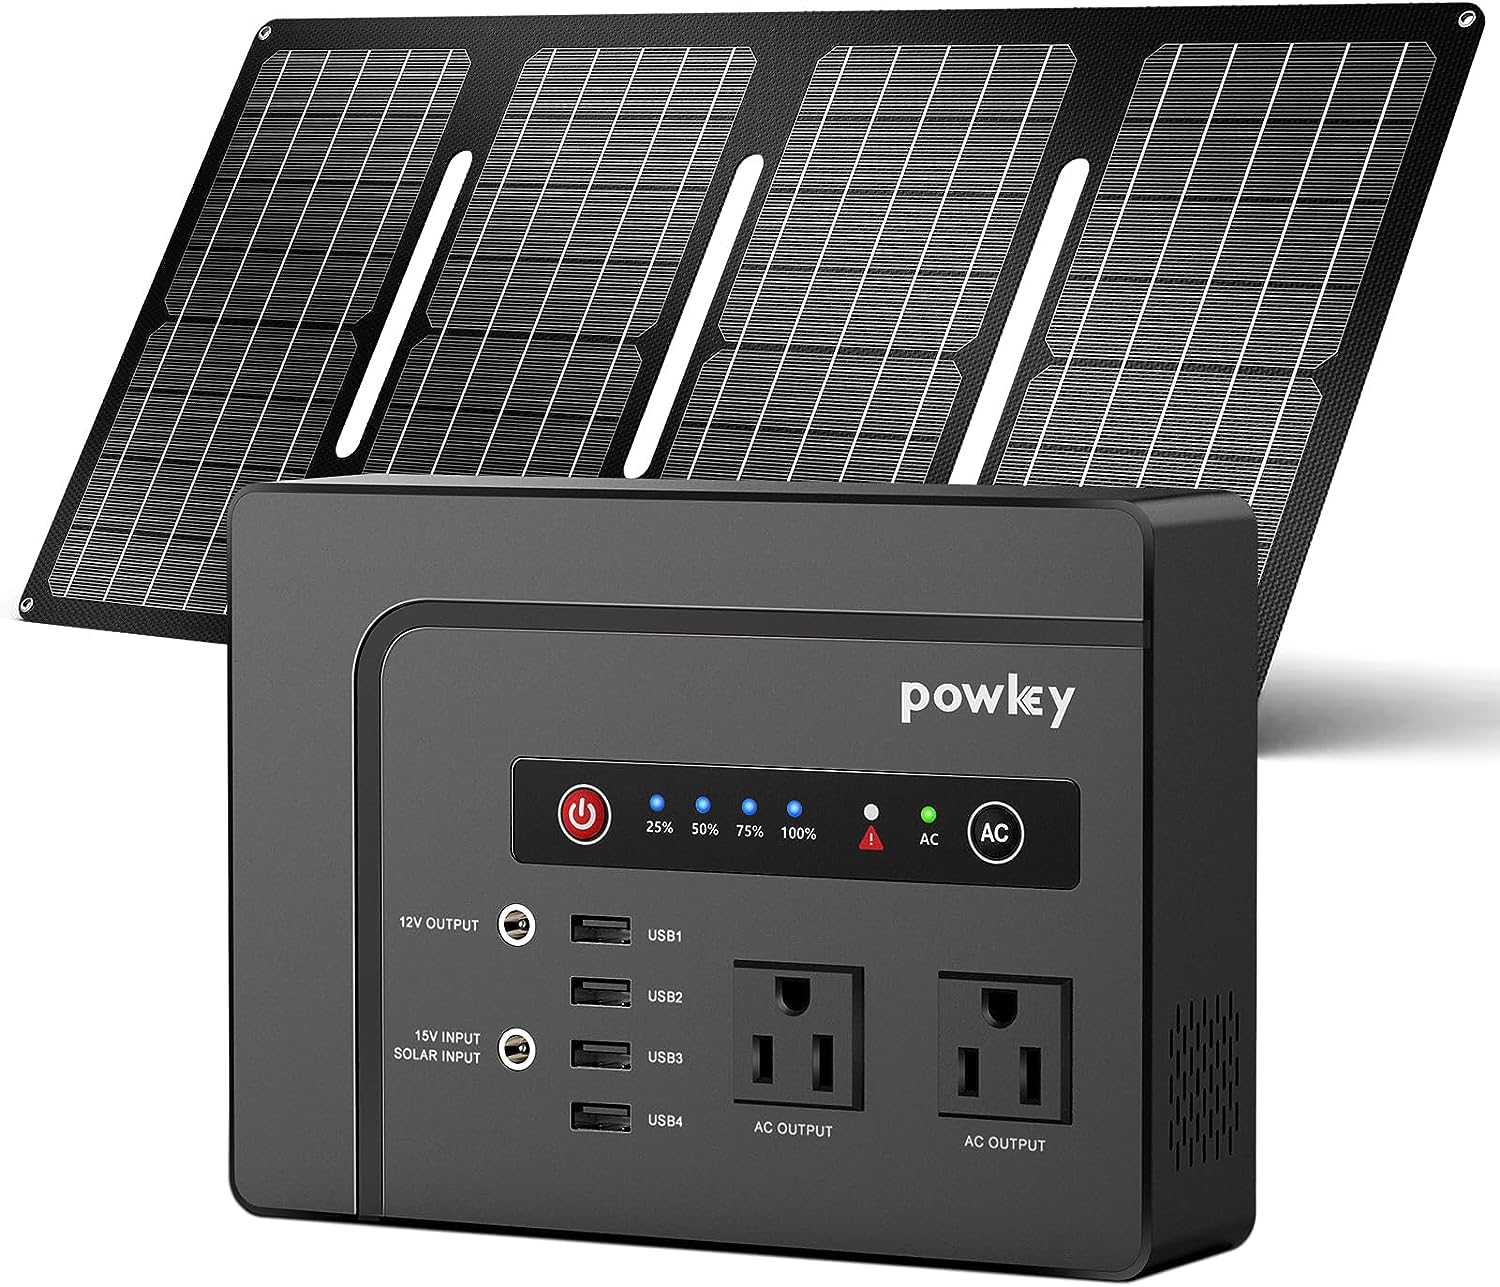 powkey-solar-generator-review